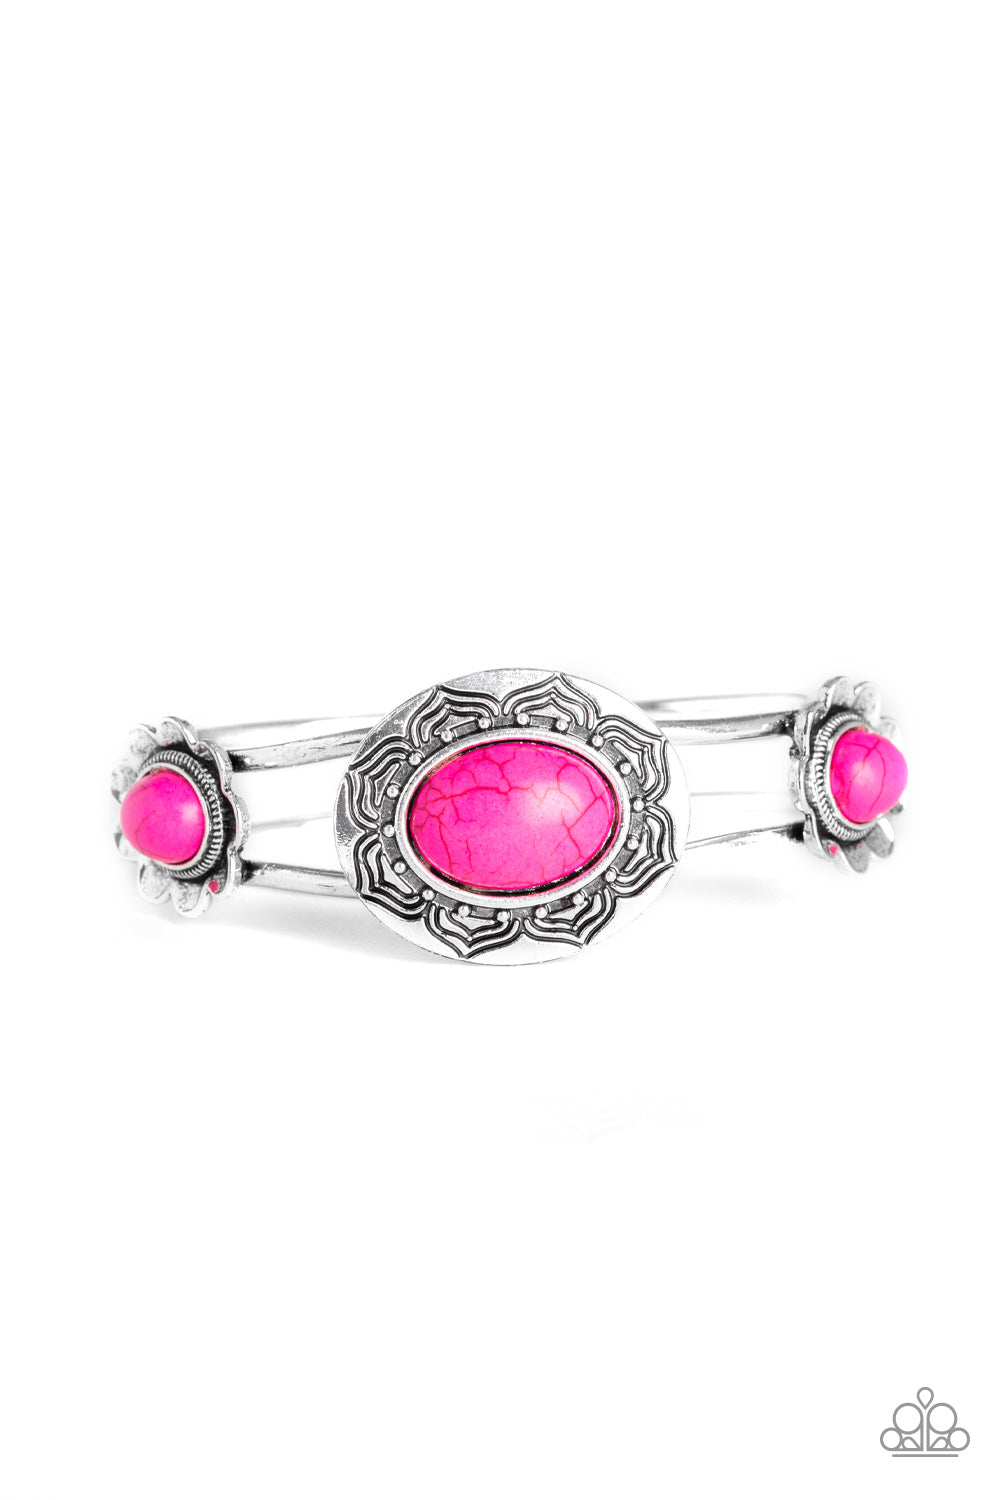 Desert Eden Pink Paparazzi Bracelets Cashmere Pink Jewels - Cashmere Pink Jewels & Accessories, Cashmere Pink Jewels & Accessories - Paparazzi